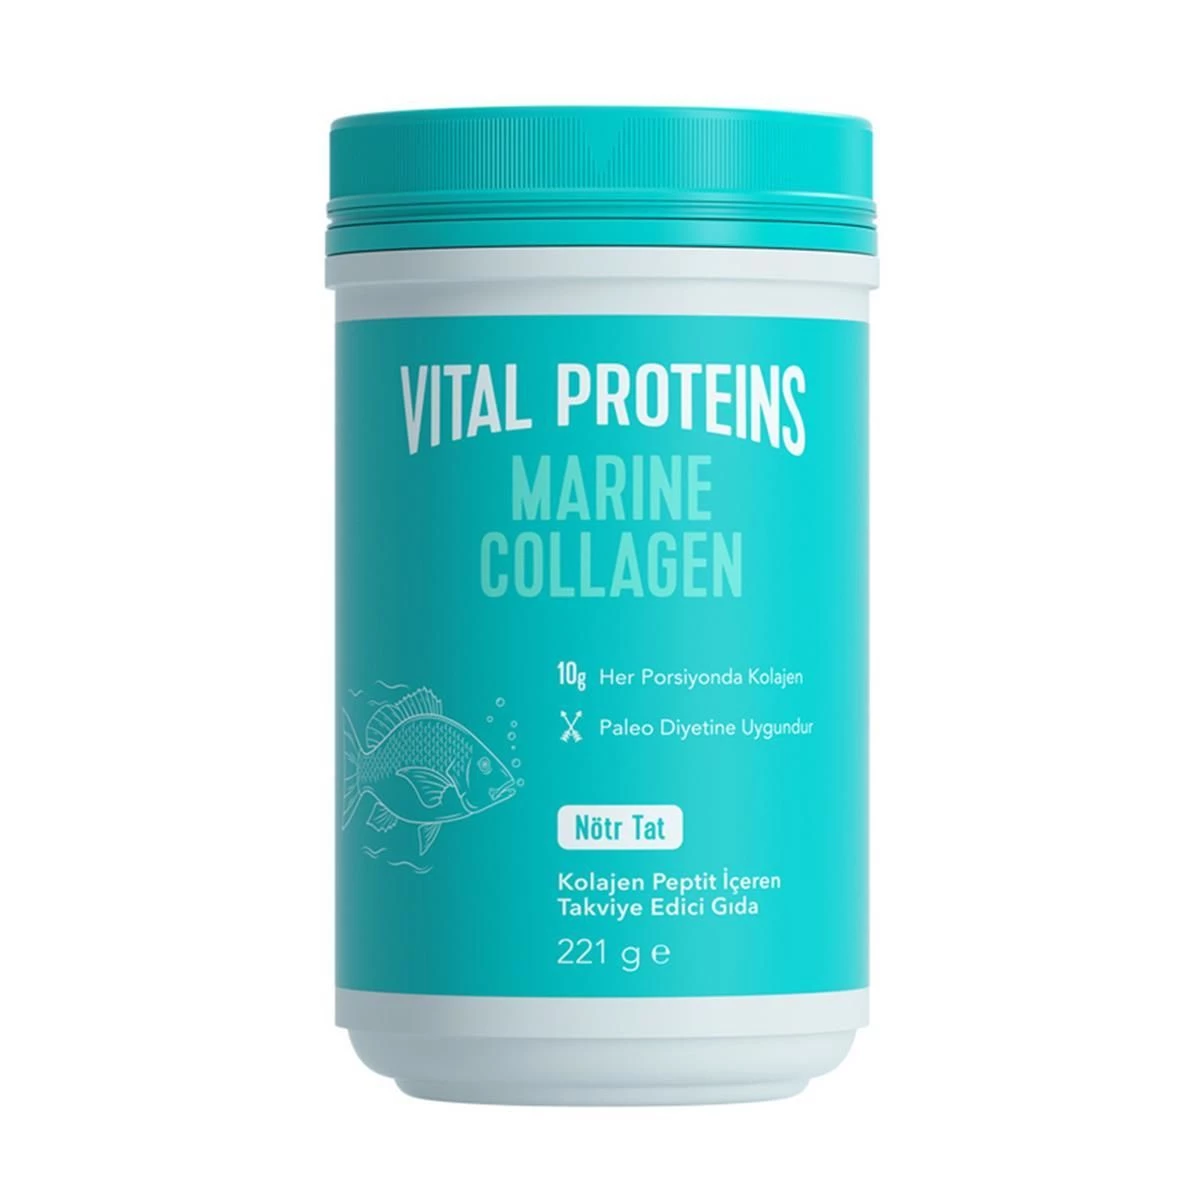 Vital Proteins Marine Collagen Nötr Tat 221 GR